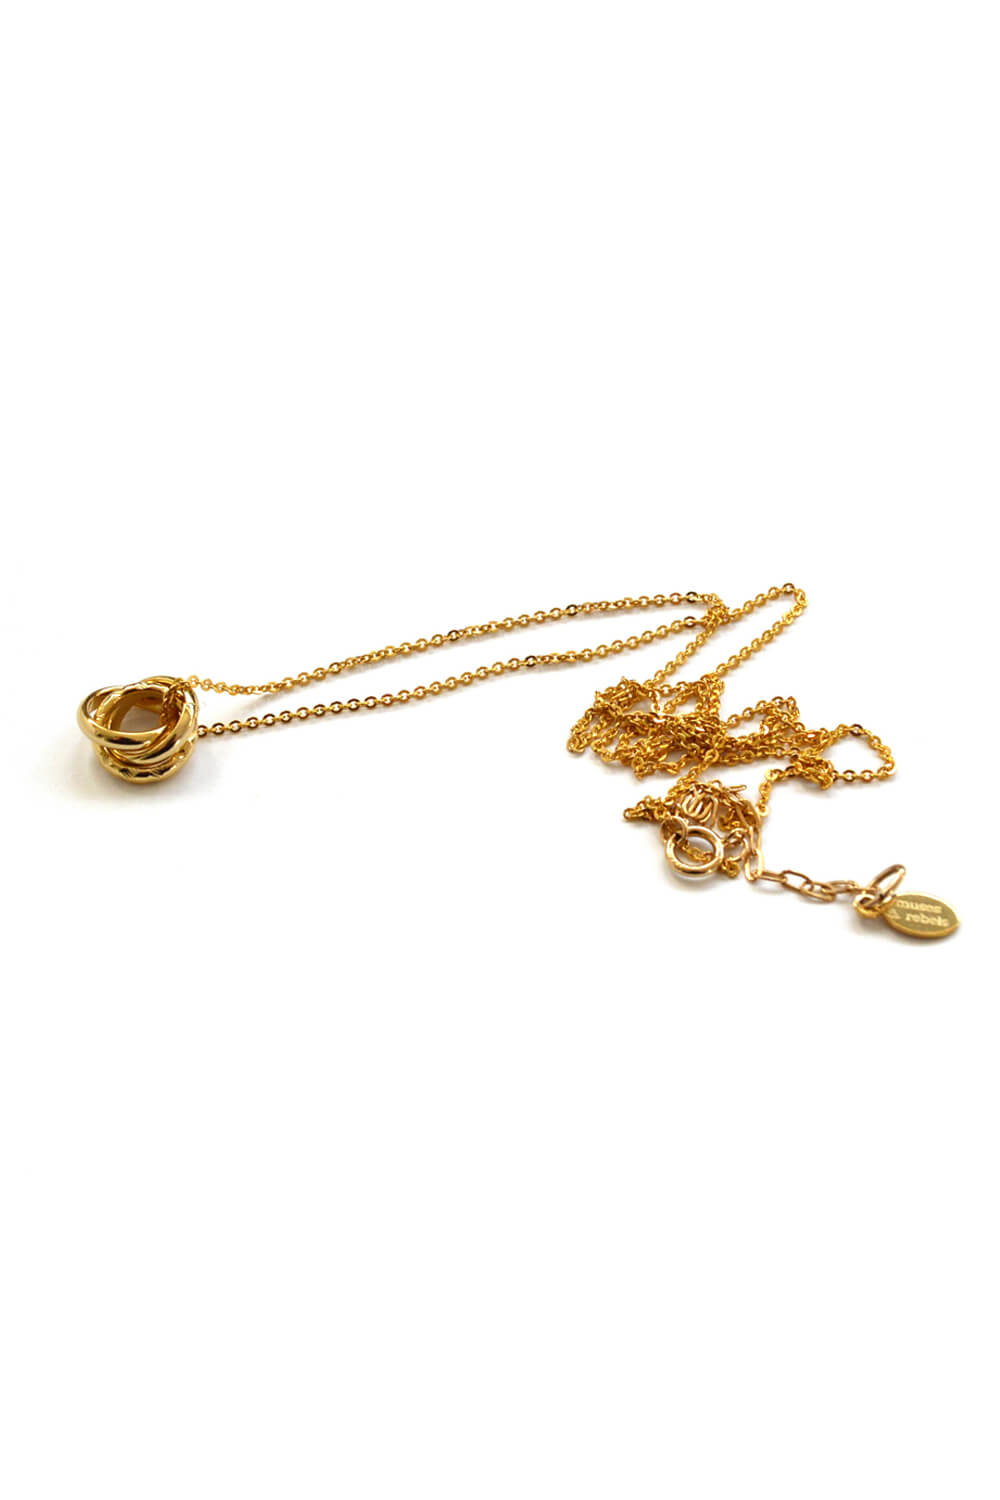 trio necklace - gold